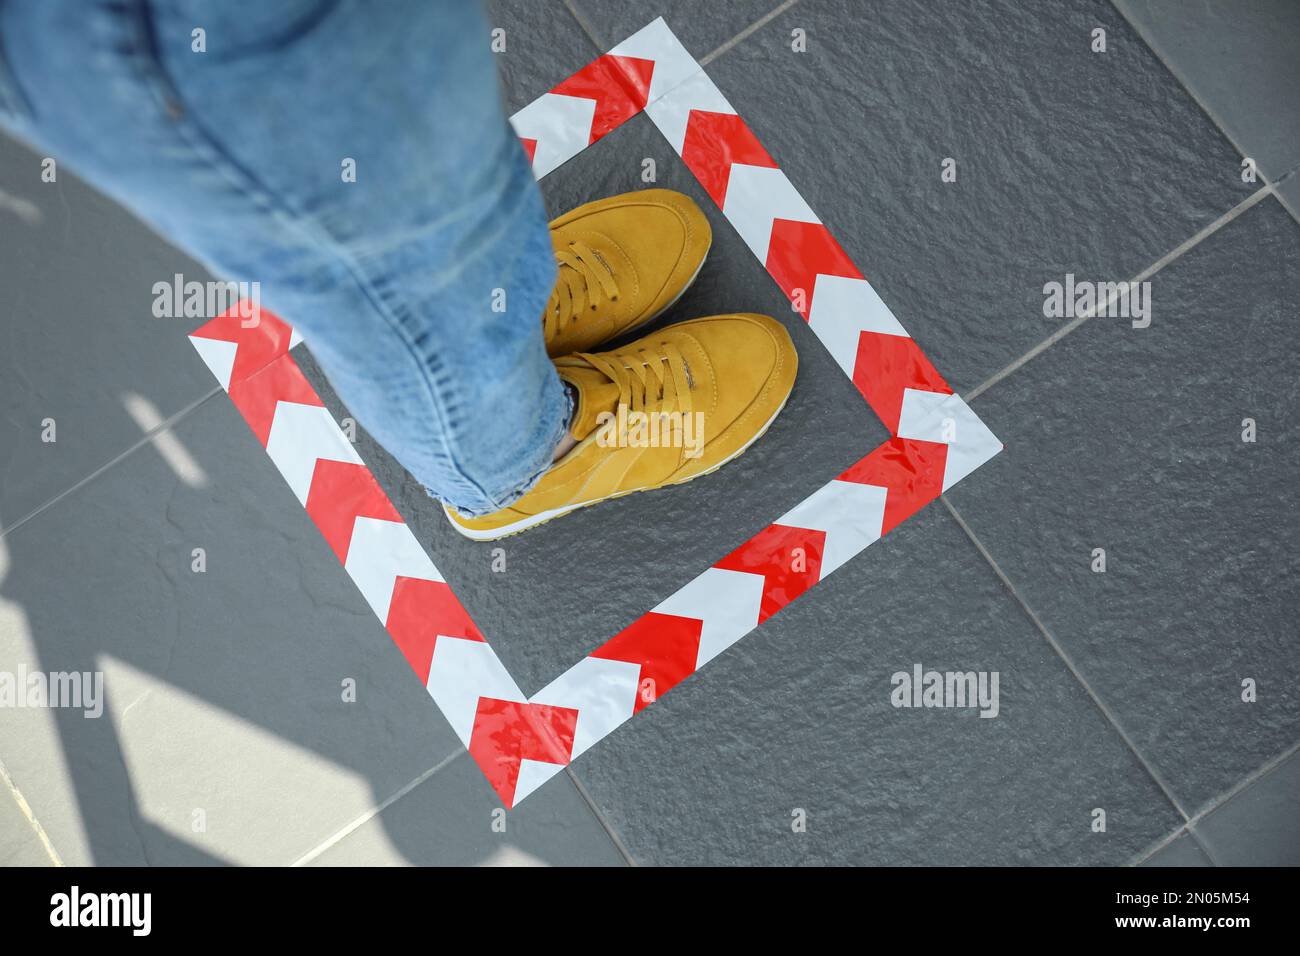 Woman standing on taped floor marking for social distance, closeup. Coronavirus pandemic Stock Photo